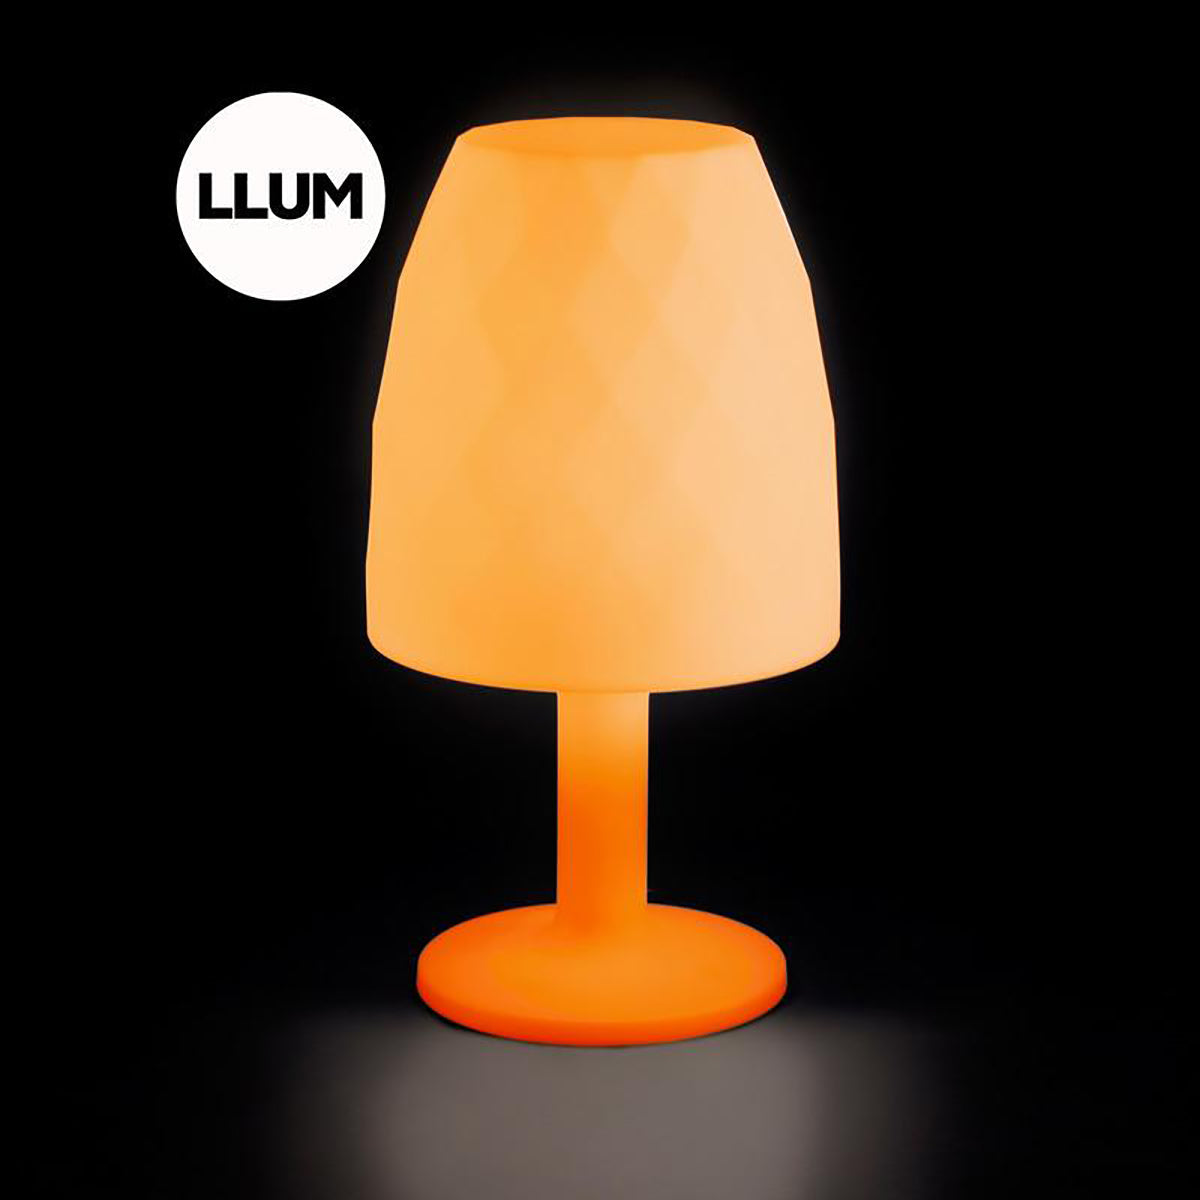 Illuminated Vases Floor Lamp